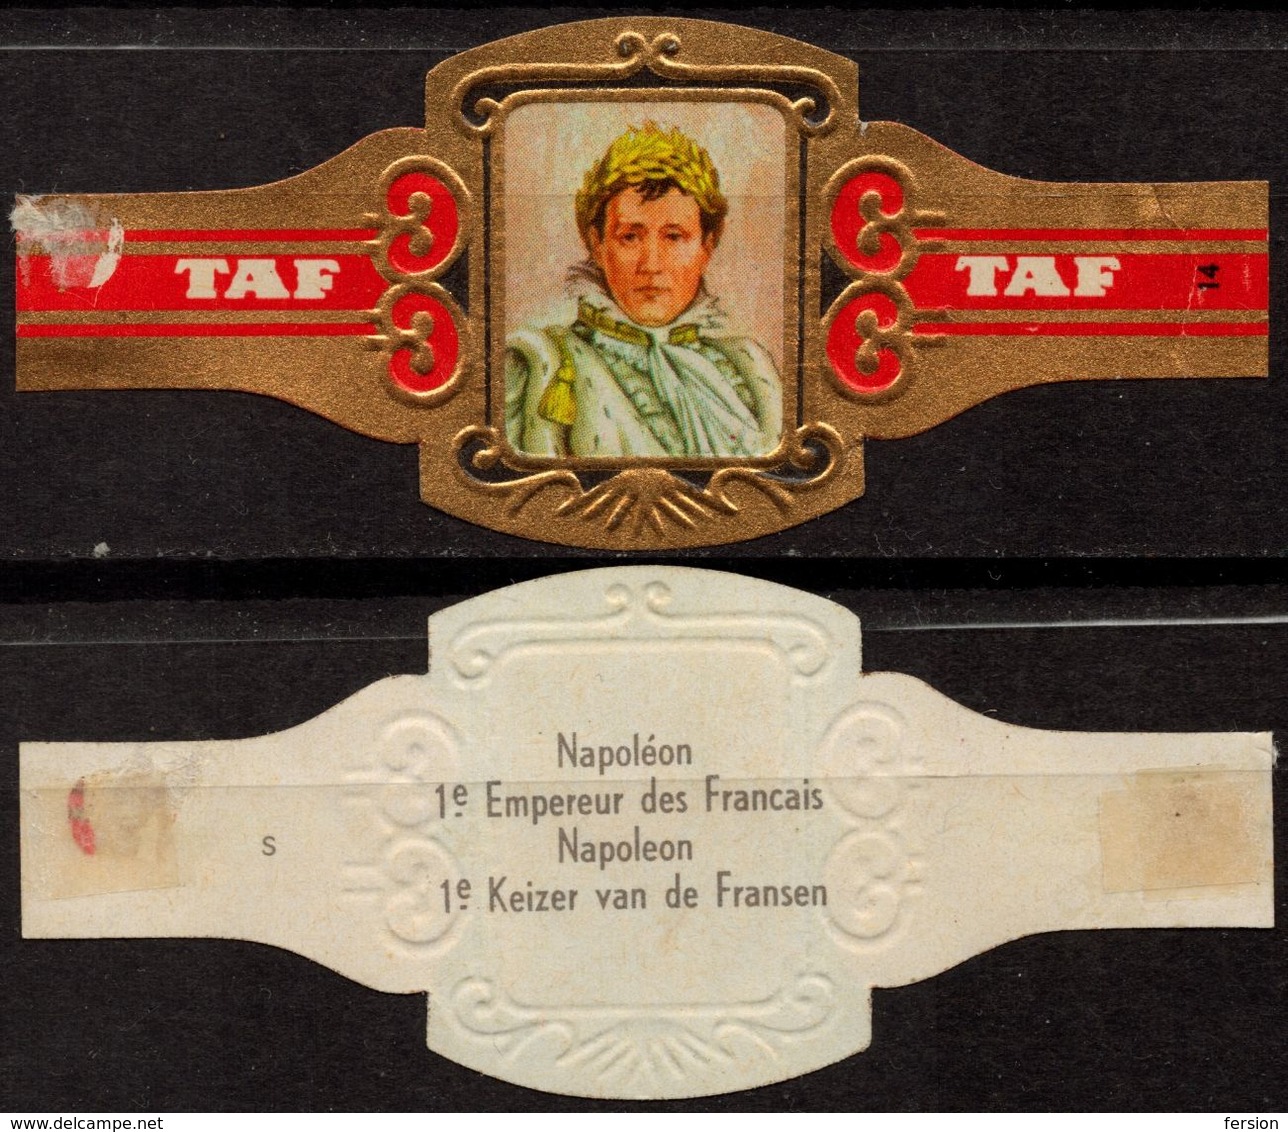 EMPEROR Napoleon - Belgium Belgique - TAF - CIGAR CIGARS Label Vignette - Etiquetas